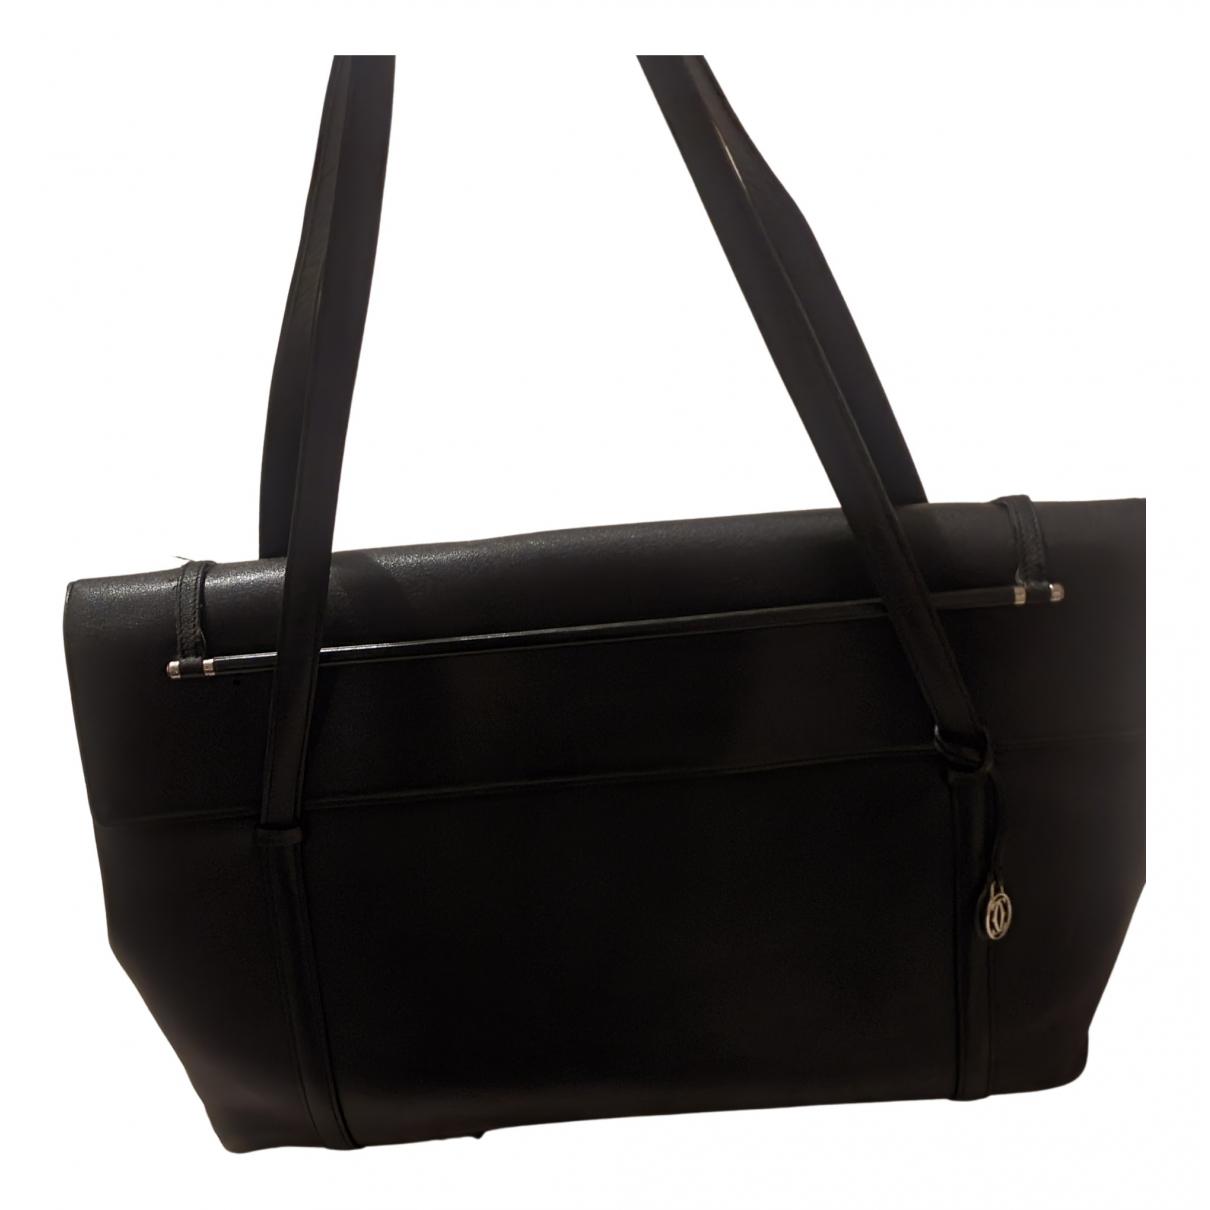 Cabochon leather handbag